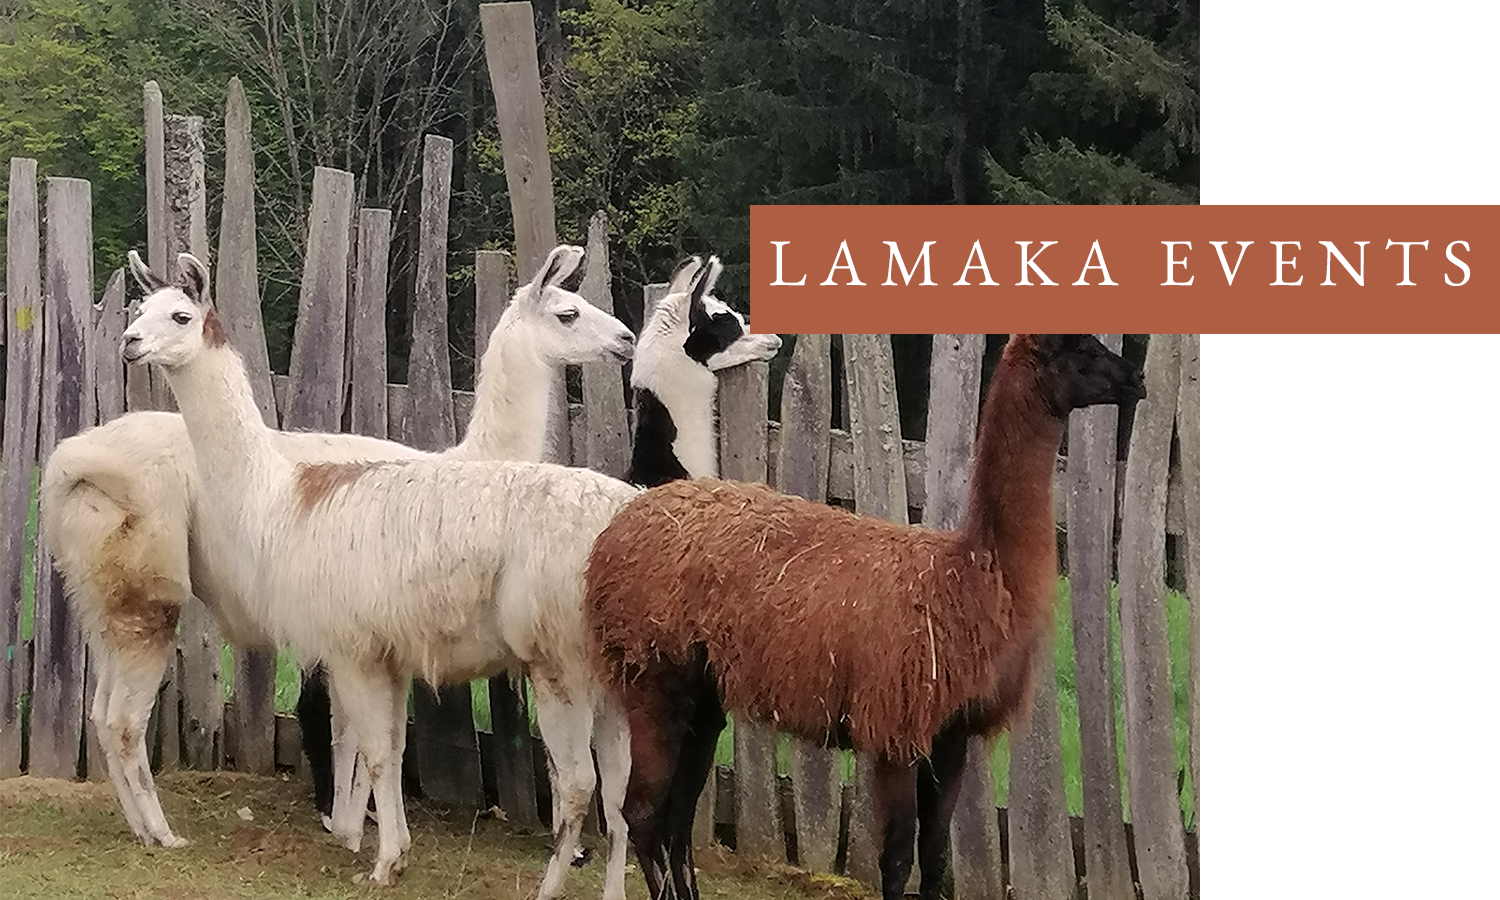 Lama und Alpaka ist Lamaka und Events